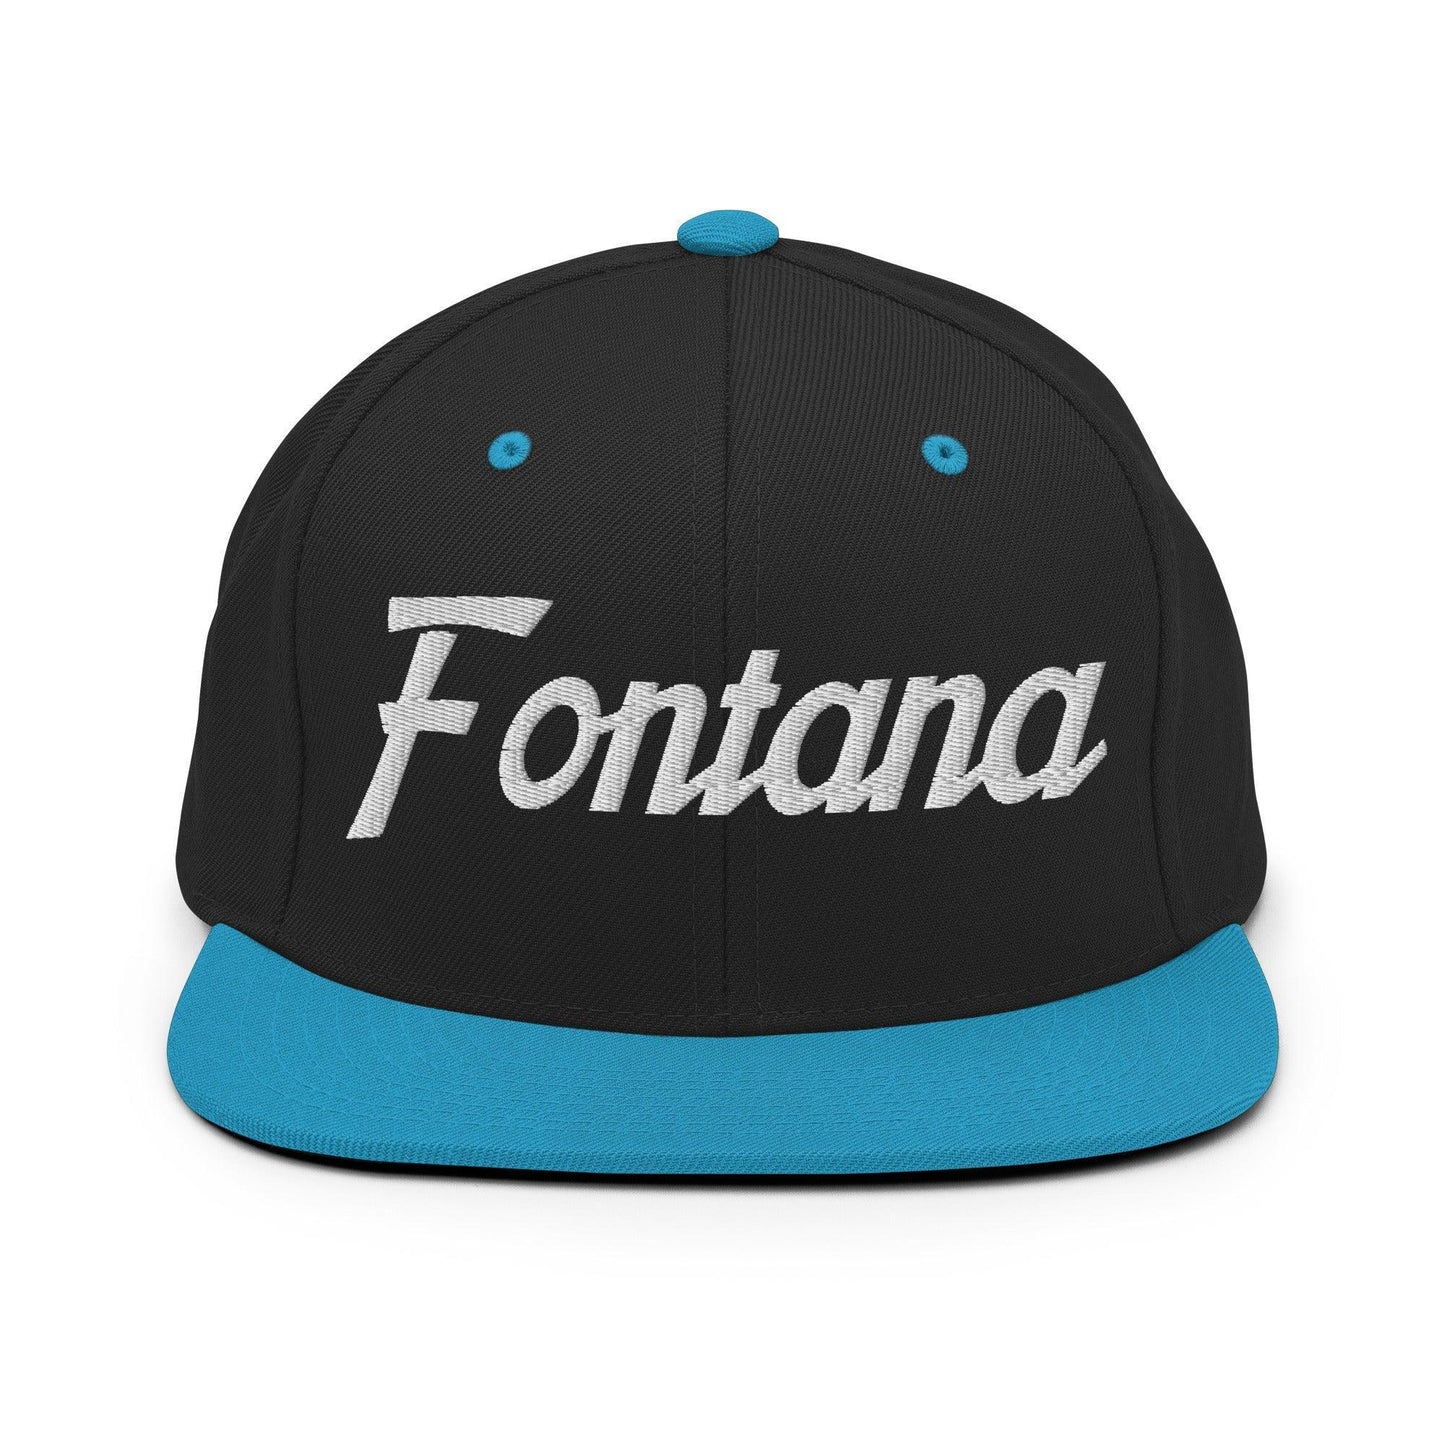 Fontana Script Snapback Hat Black Teal